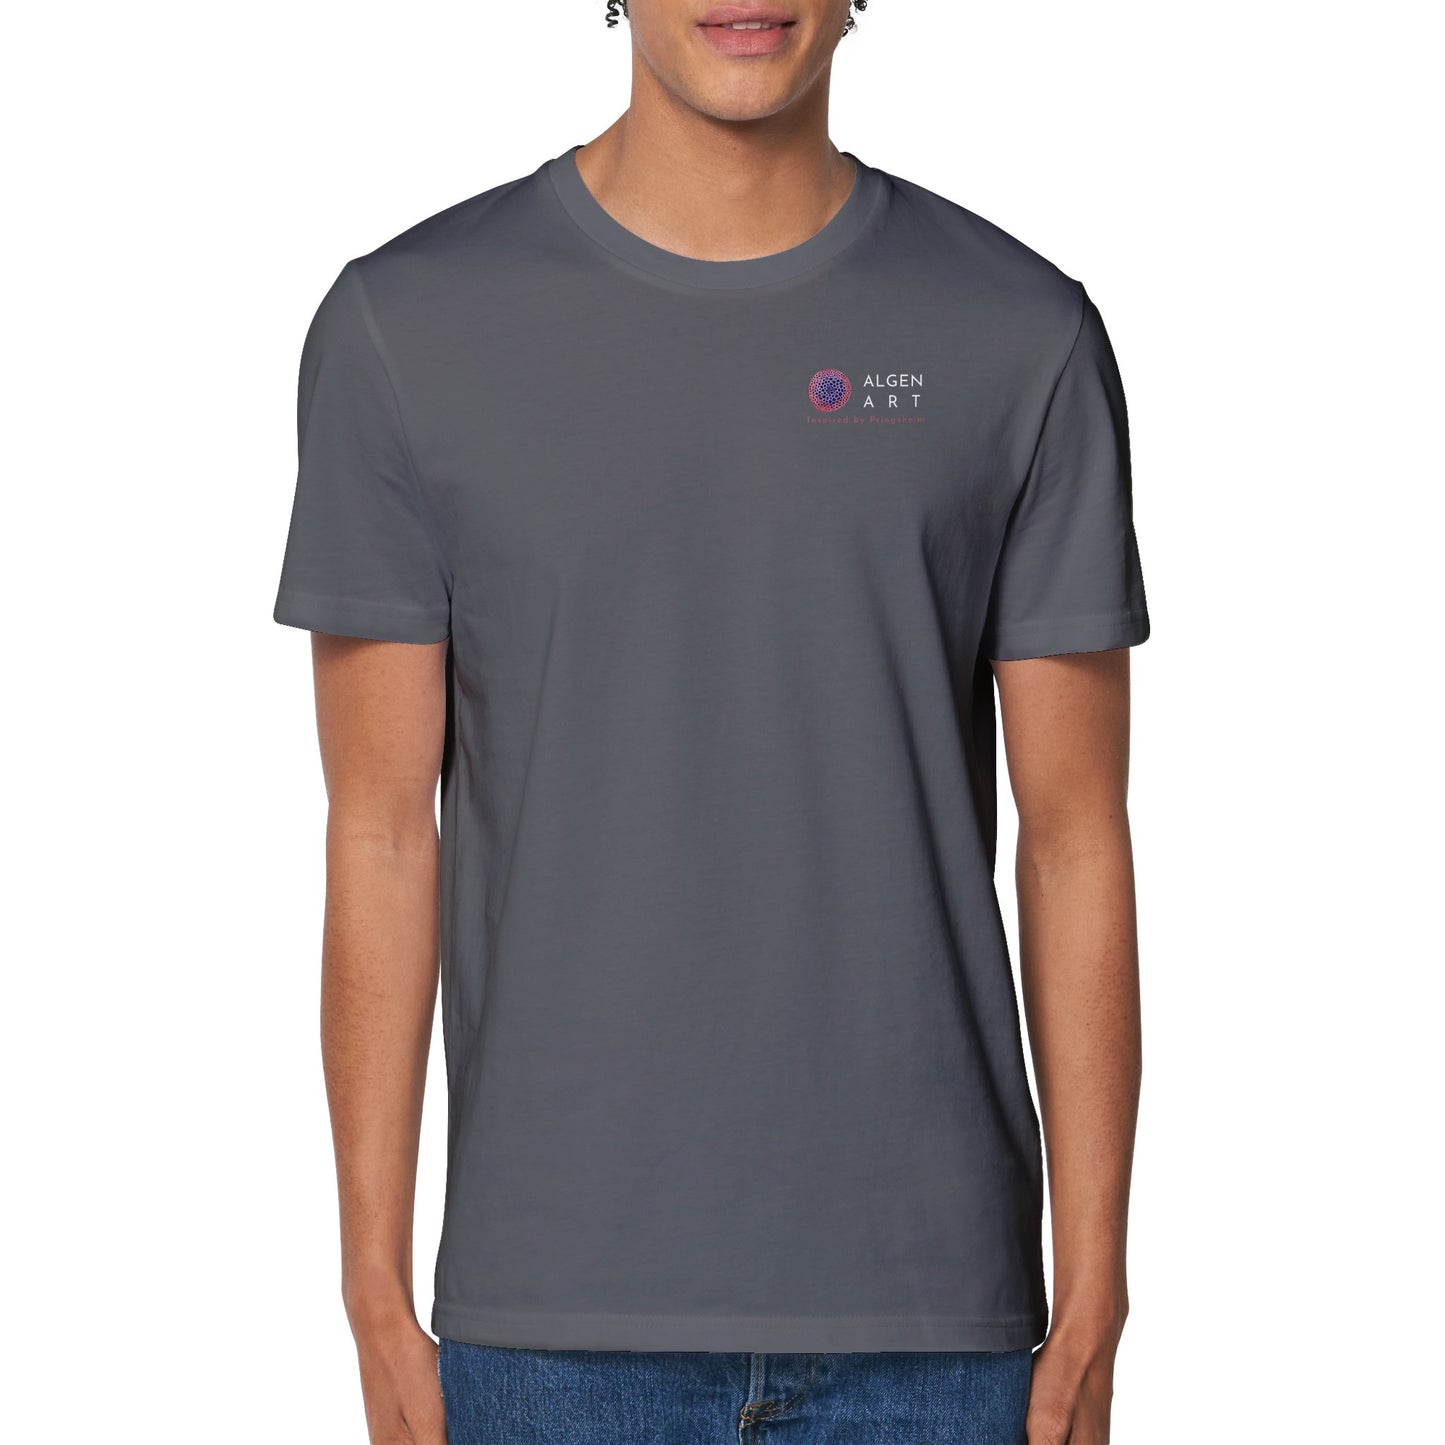 Hypnum T-Shirt